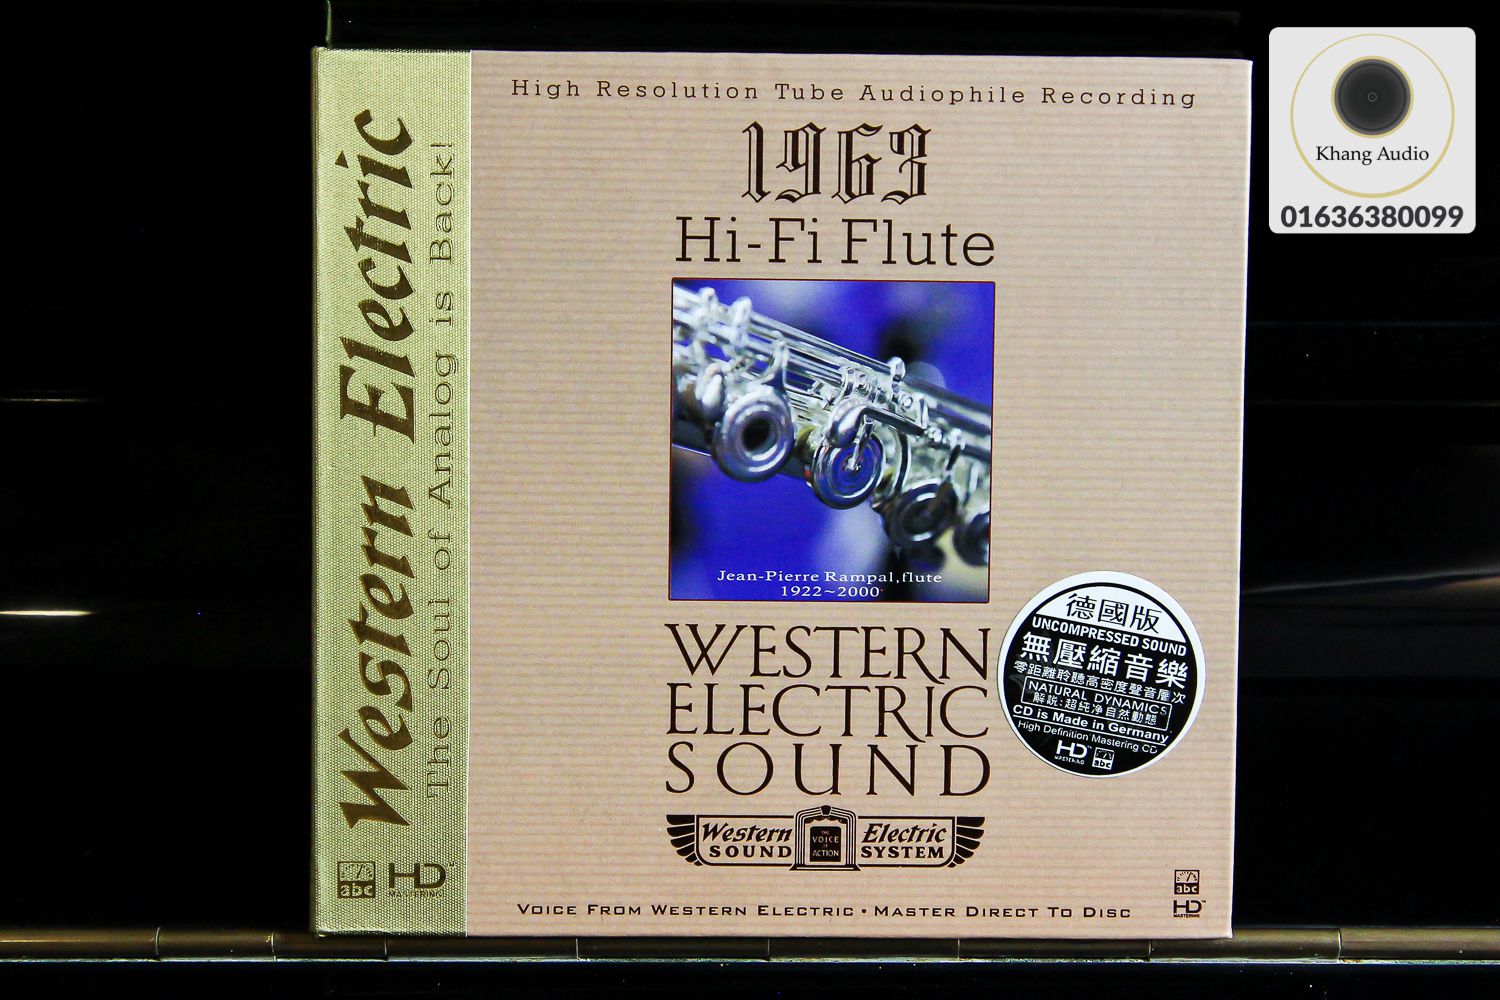 Western Electric Sound - 1963 Hi-Fi Flute HQ Khang Audio 0336380099